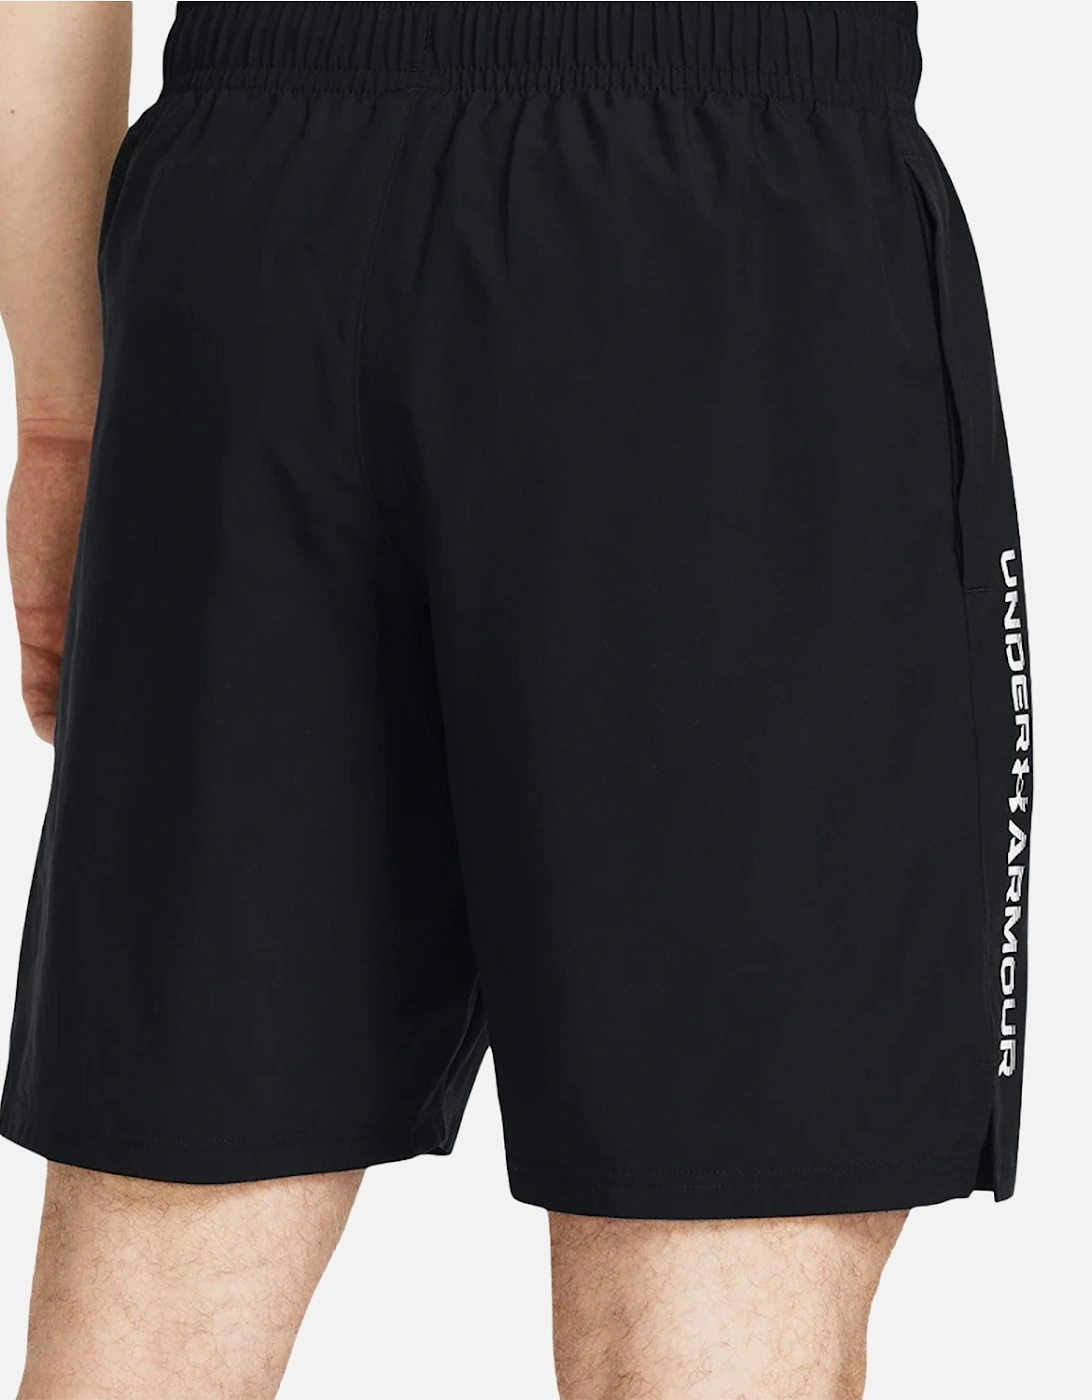 Mens Tech Woven Wordmark Shorts (Black/White)